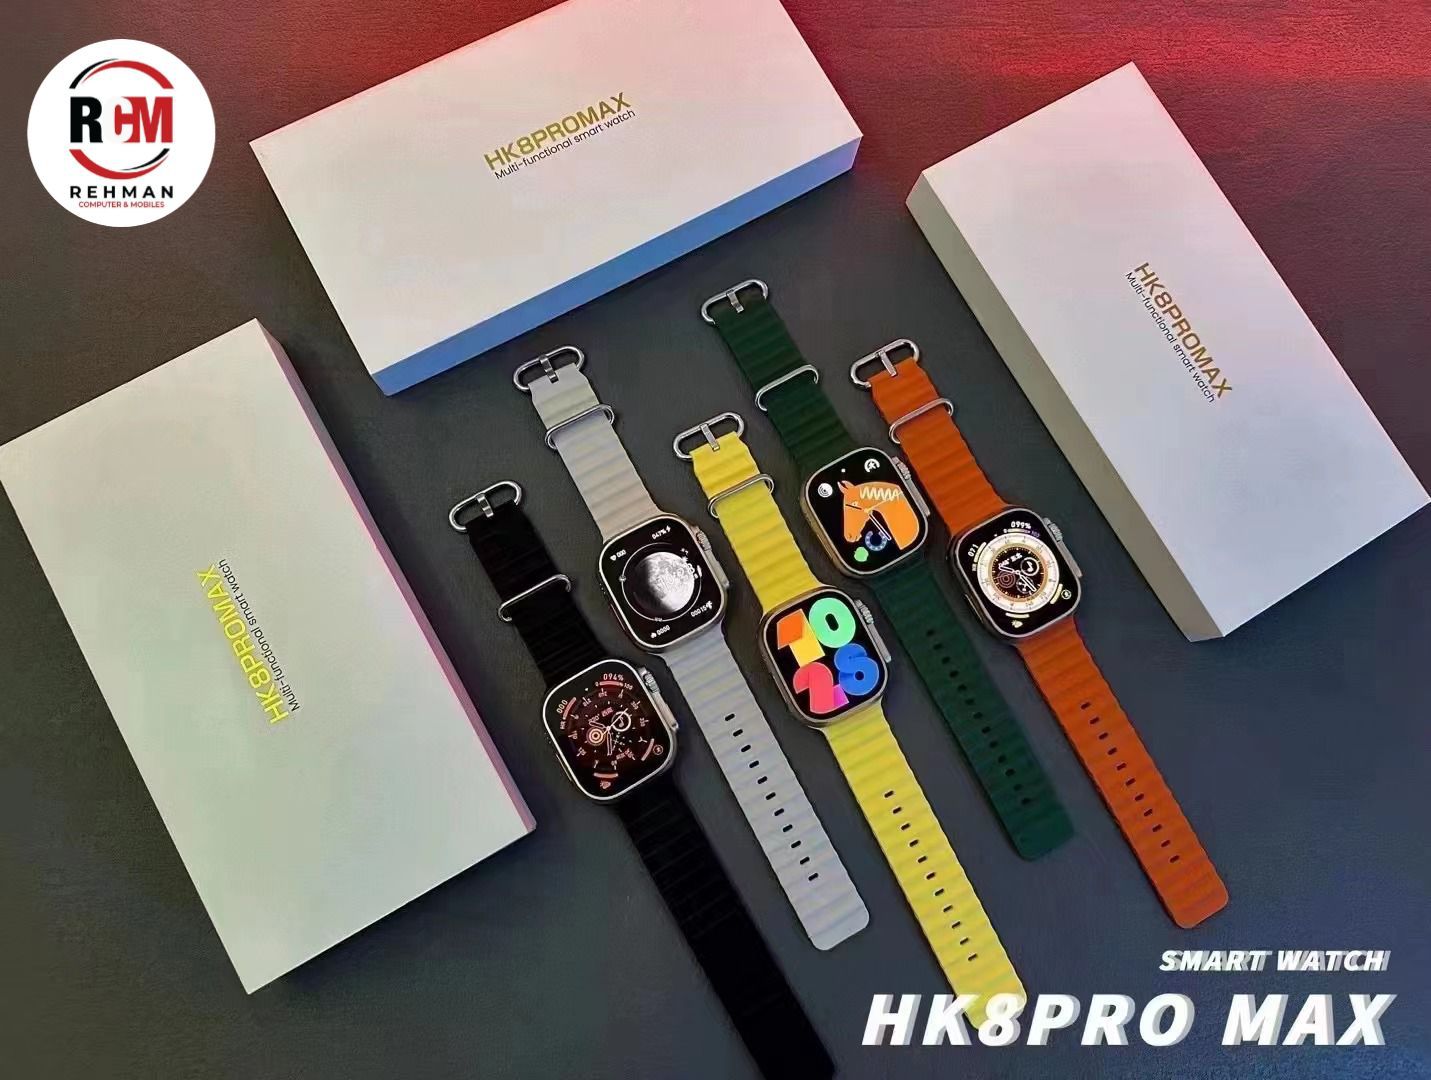 https://www.rcmmultimedia.com/storage/photos/1/Smart watches/HK8 Pro Max Ultra for Men Smart Watch.jpeg